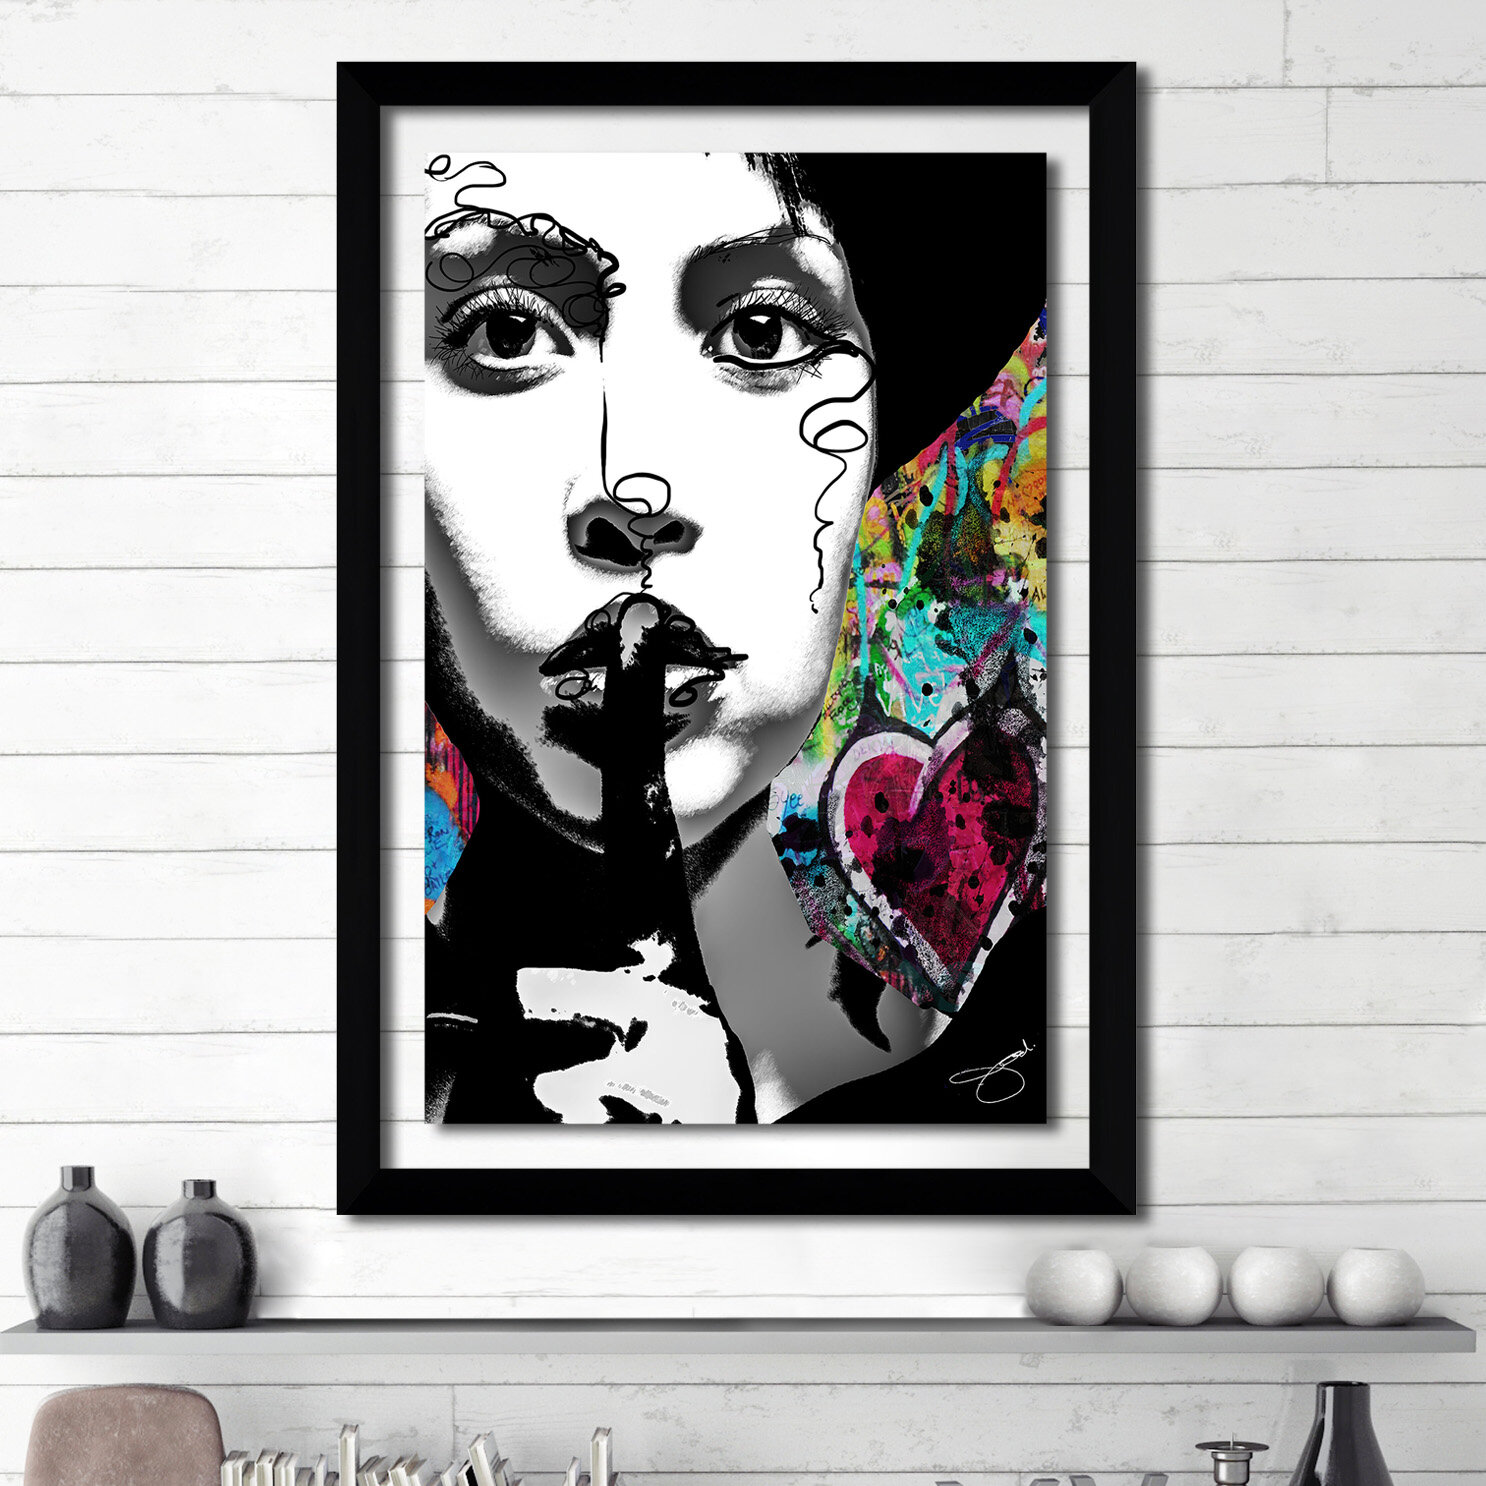 Shhhh' Jodi Graphic Art Print on Canvas Picture Perfect International Format: Black Framed, Size: 27.5 H x 21.5 W x 0.75 D